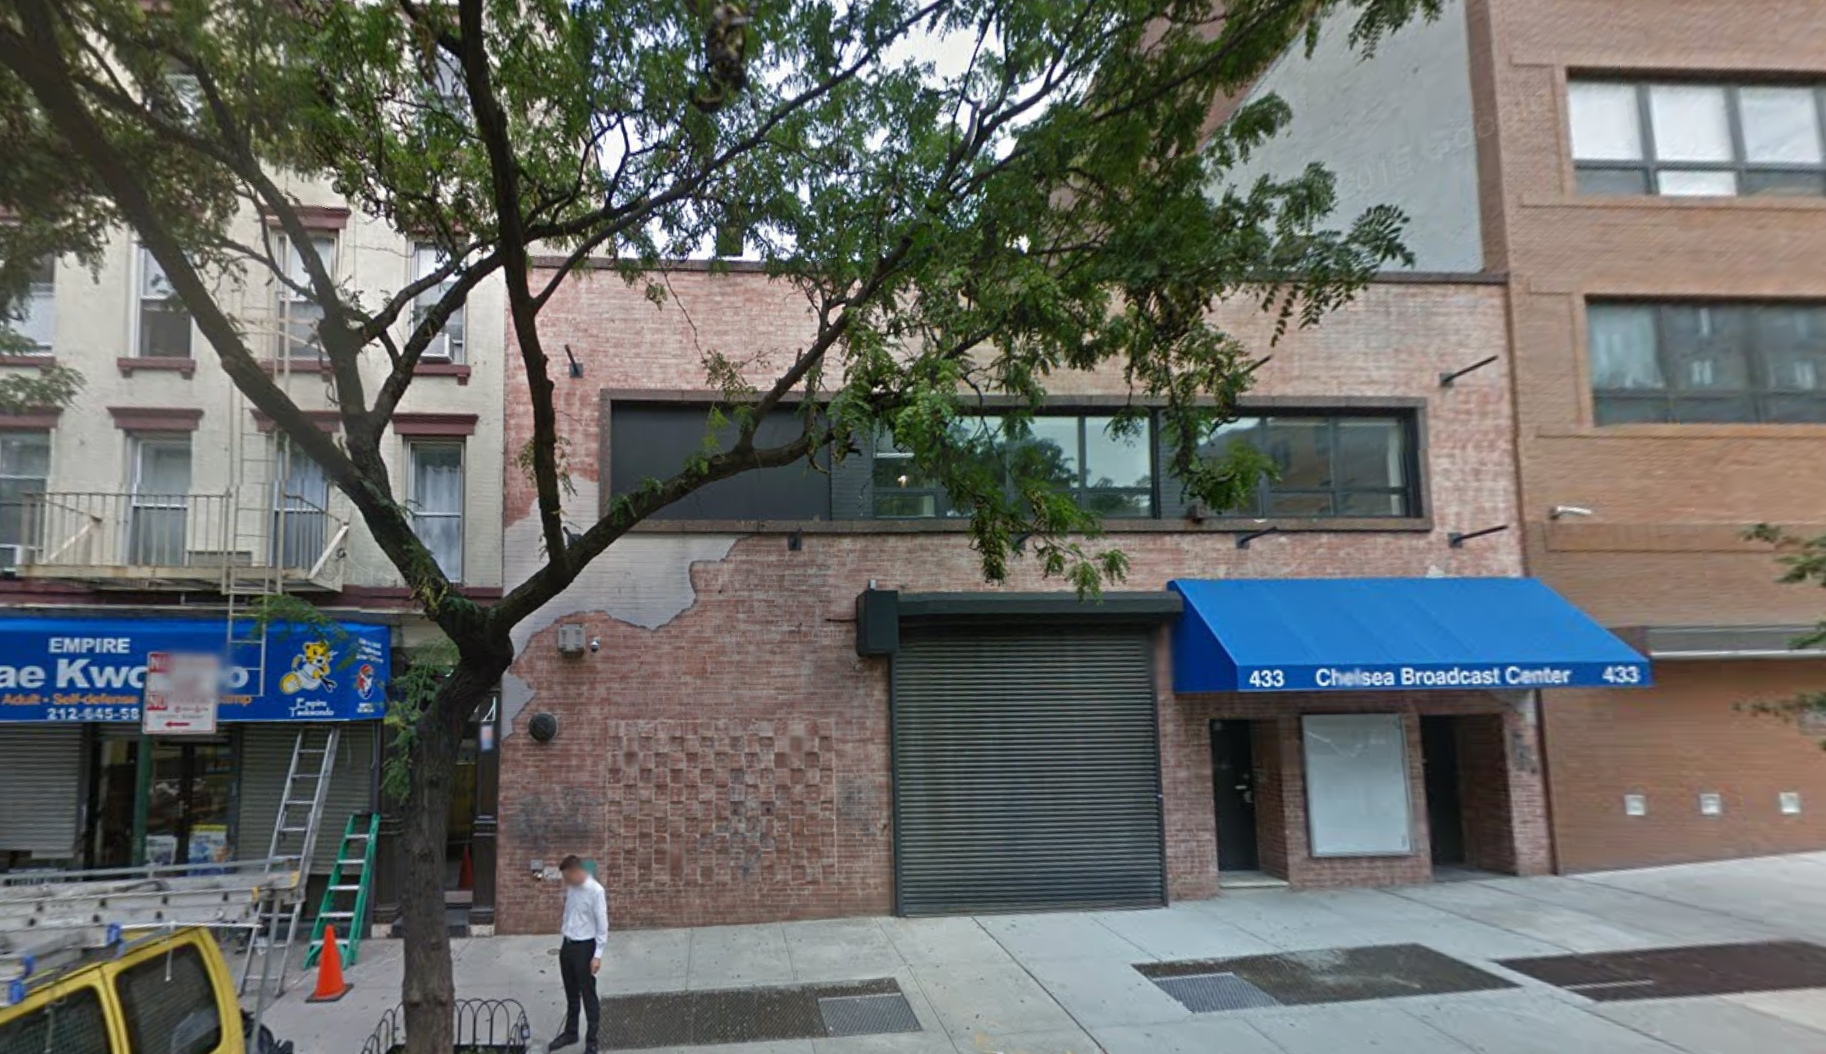 433 West 53rd Street, image via Google Maps